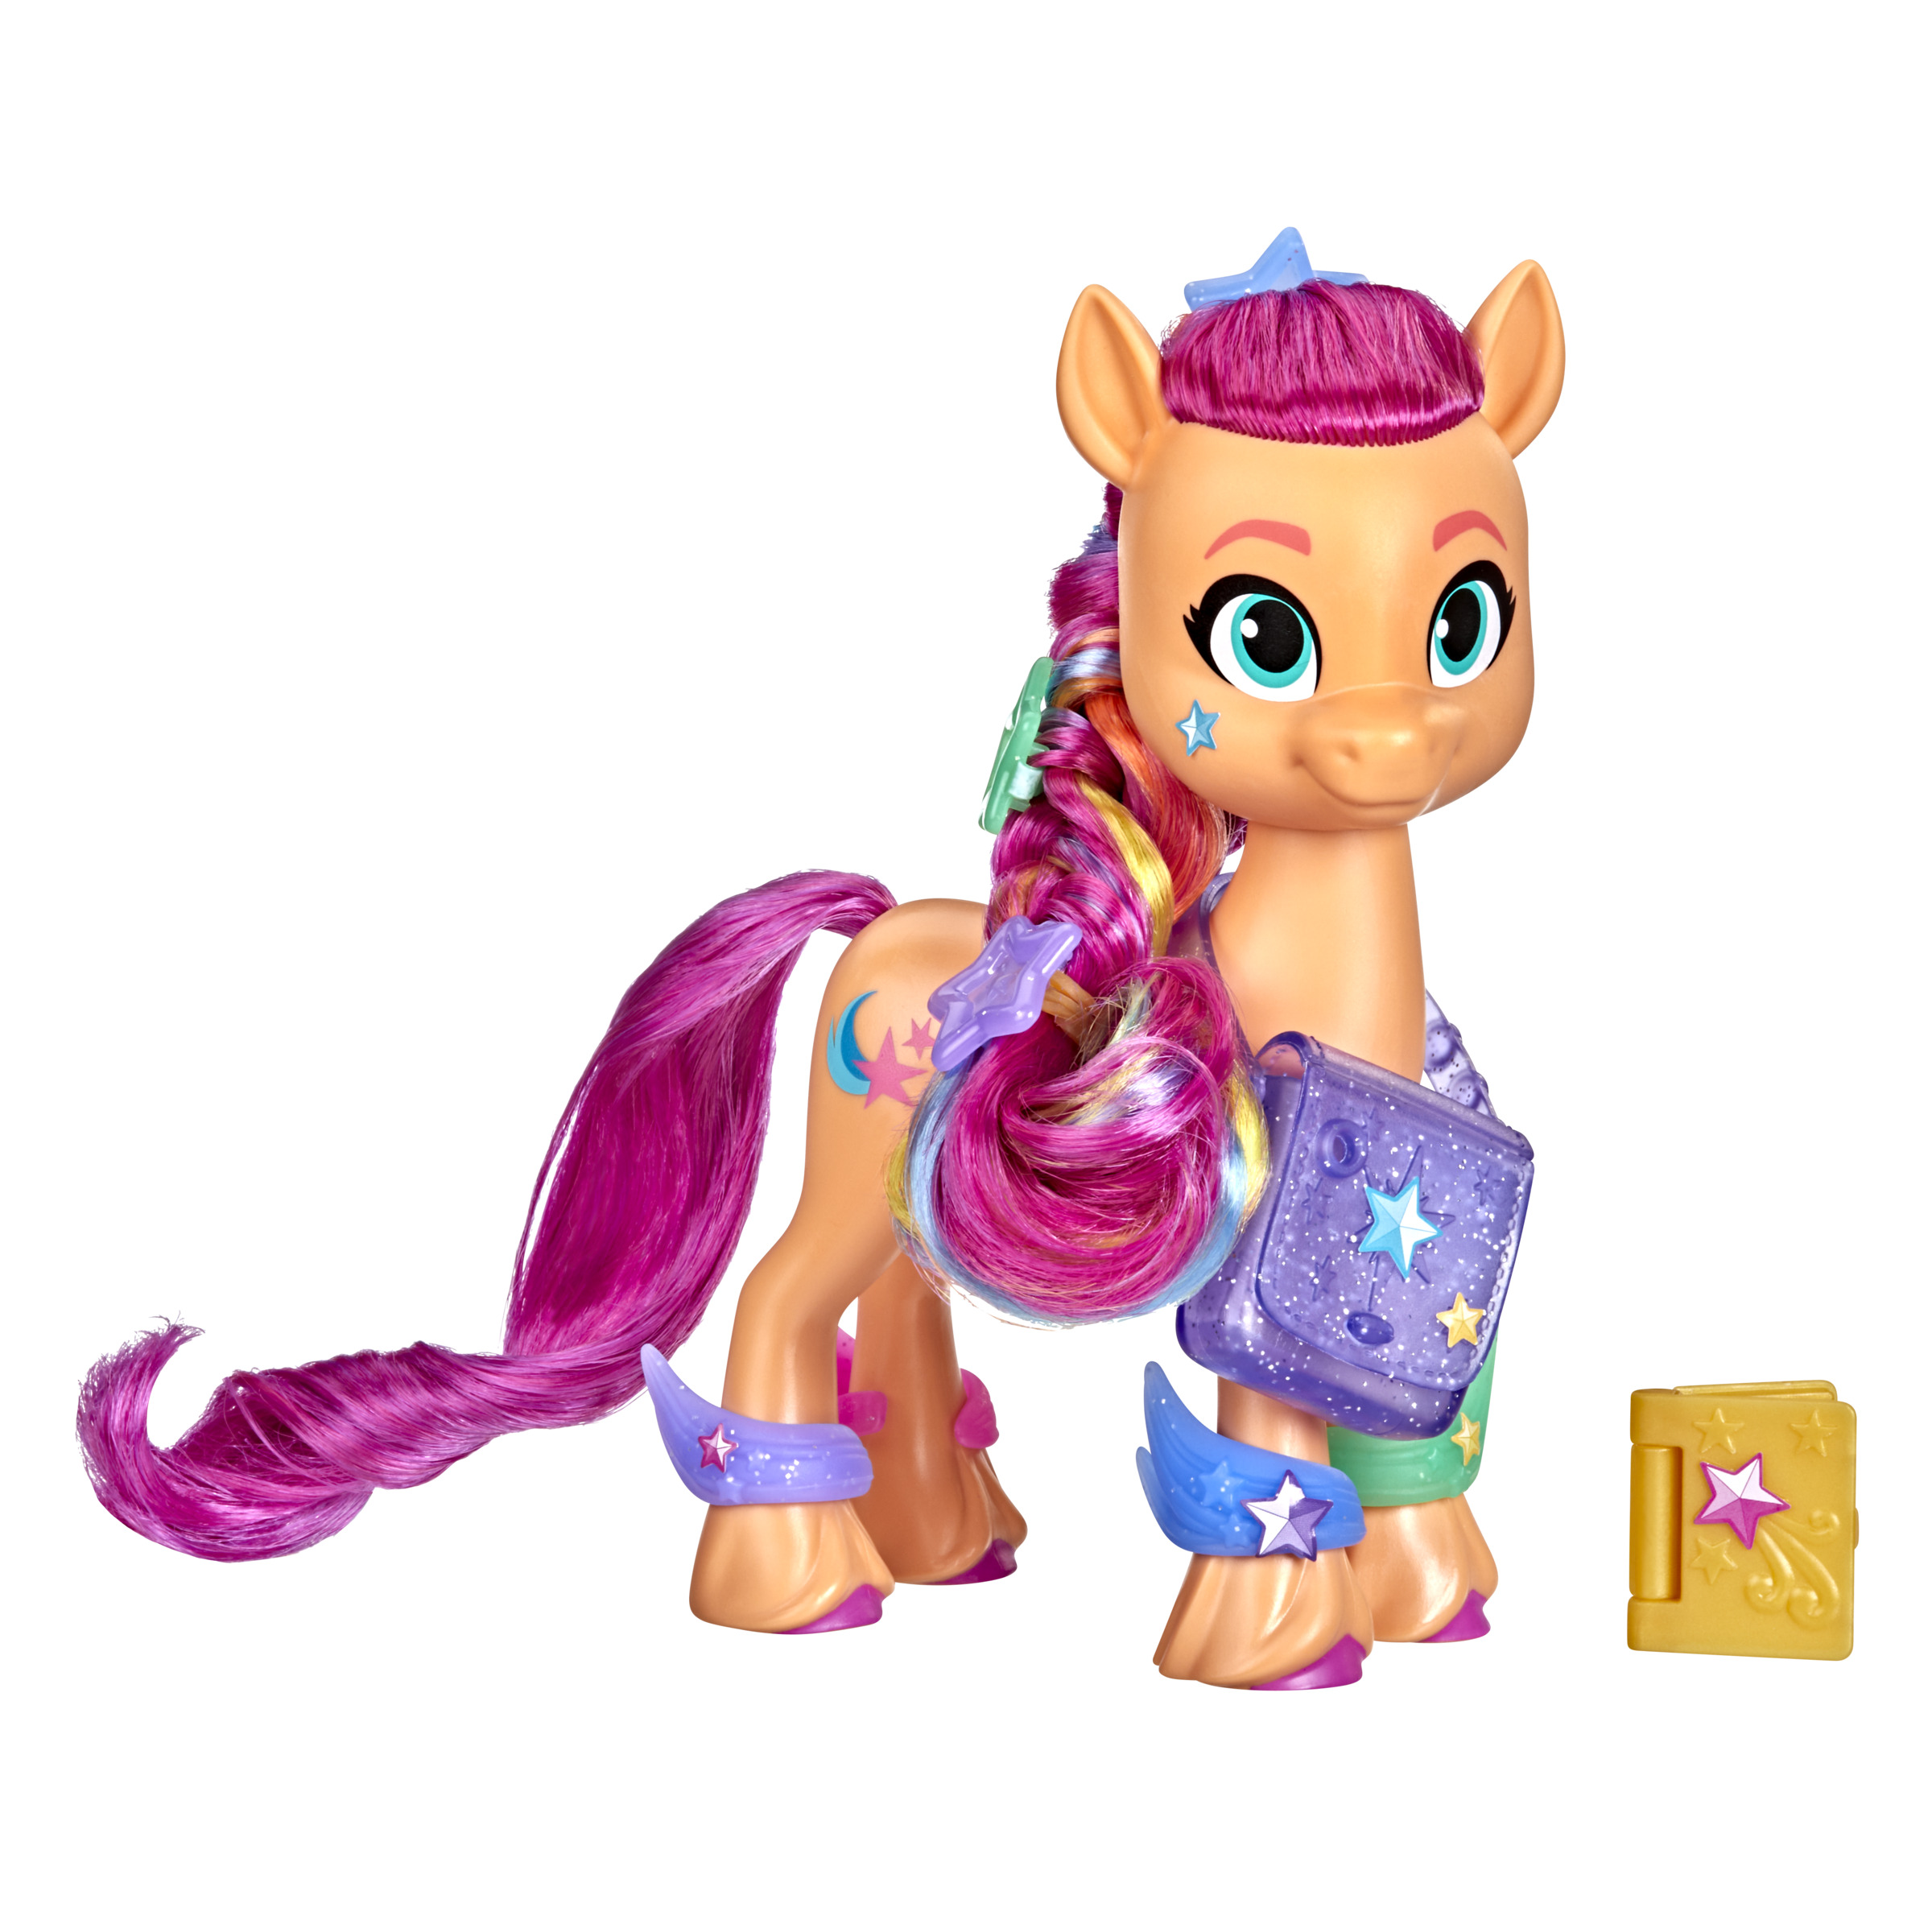 Generation MY Pony: PONY Figura My Peinados Sunny New A Little Starscout LITTLE - mágicos